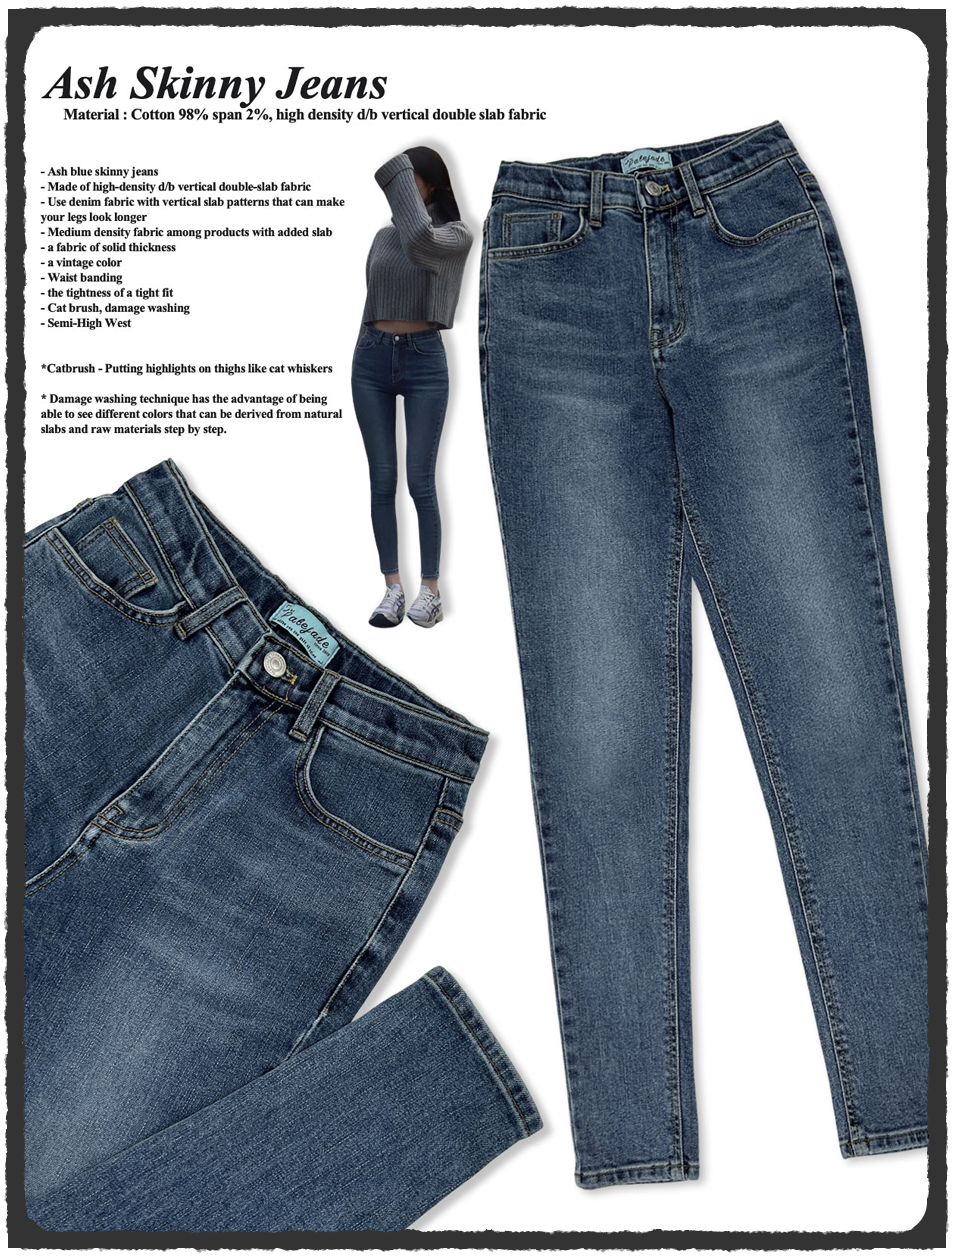 Ash Skinny Jeans